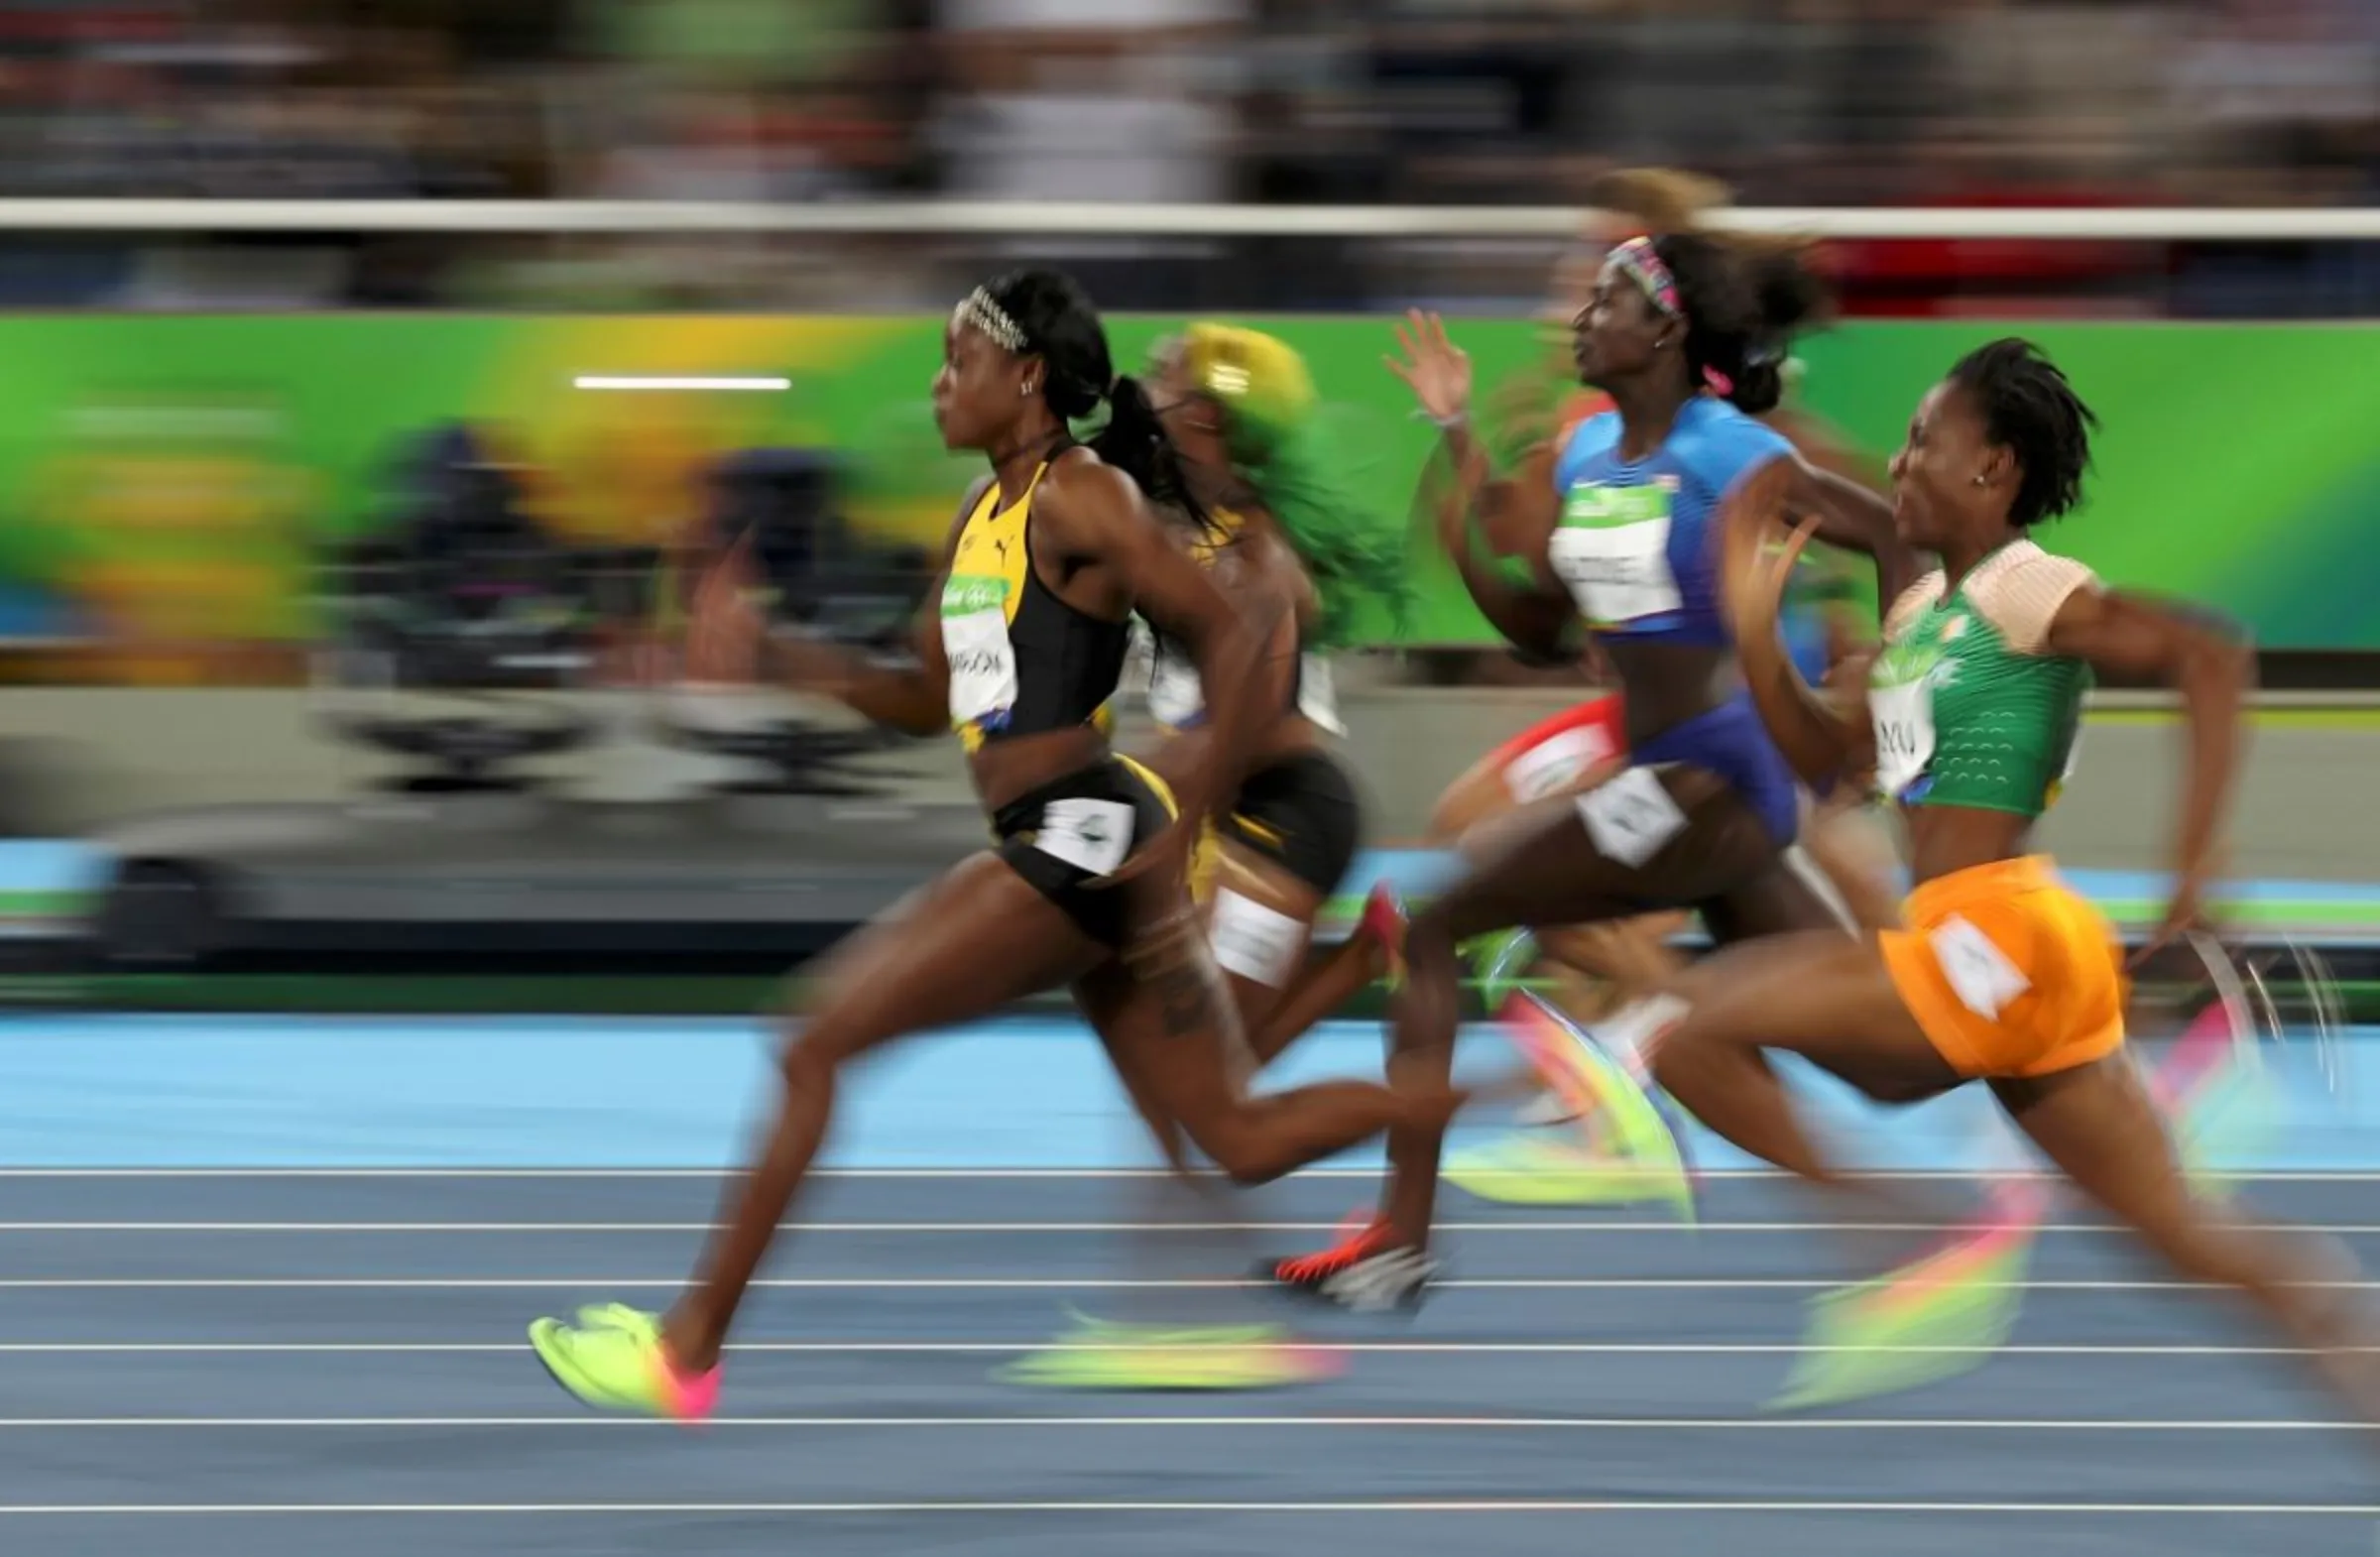 2016 Rio Olympics - Athletics - Final - Women's 100m Final - Olympic Stadium - Rio de Janeiro, Brazil - 13/08/2016. Elaine Thompson (JAM) of Jamaica leads as she races to win the gold. REUTERS/Phil Noble